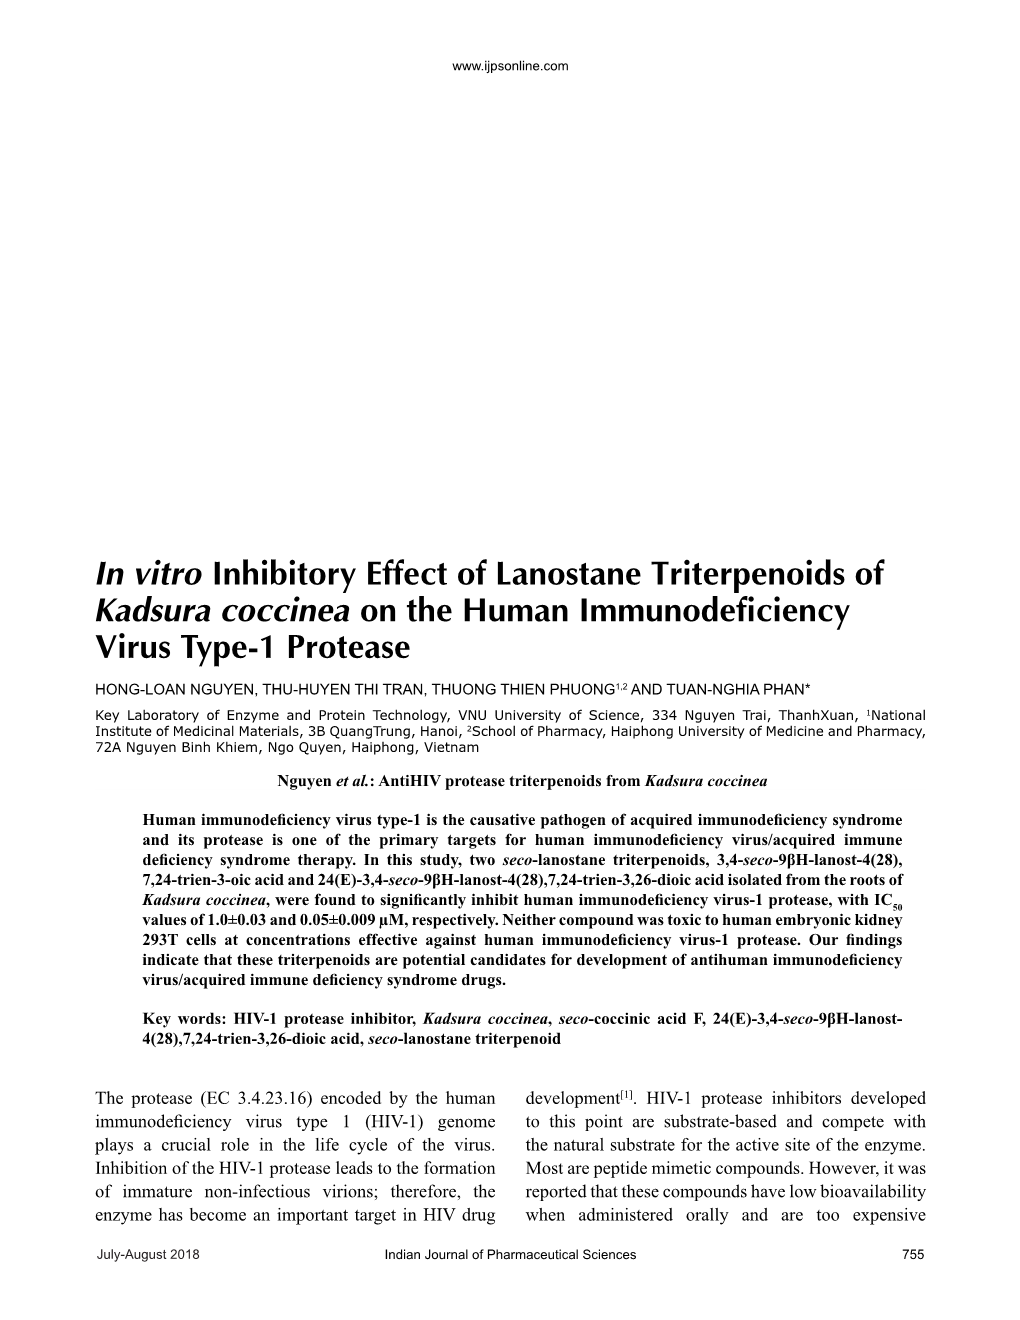 In Vitro Inhibitory Effect of Lanostane Triterpenoids of Kadsura Coccinea on the Human Immunodeficiency Virus Type-1 Protease